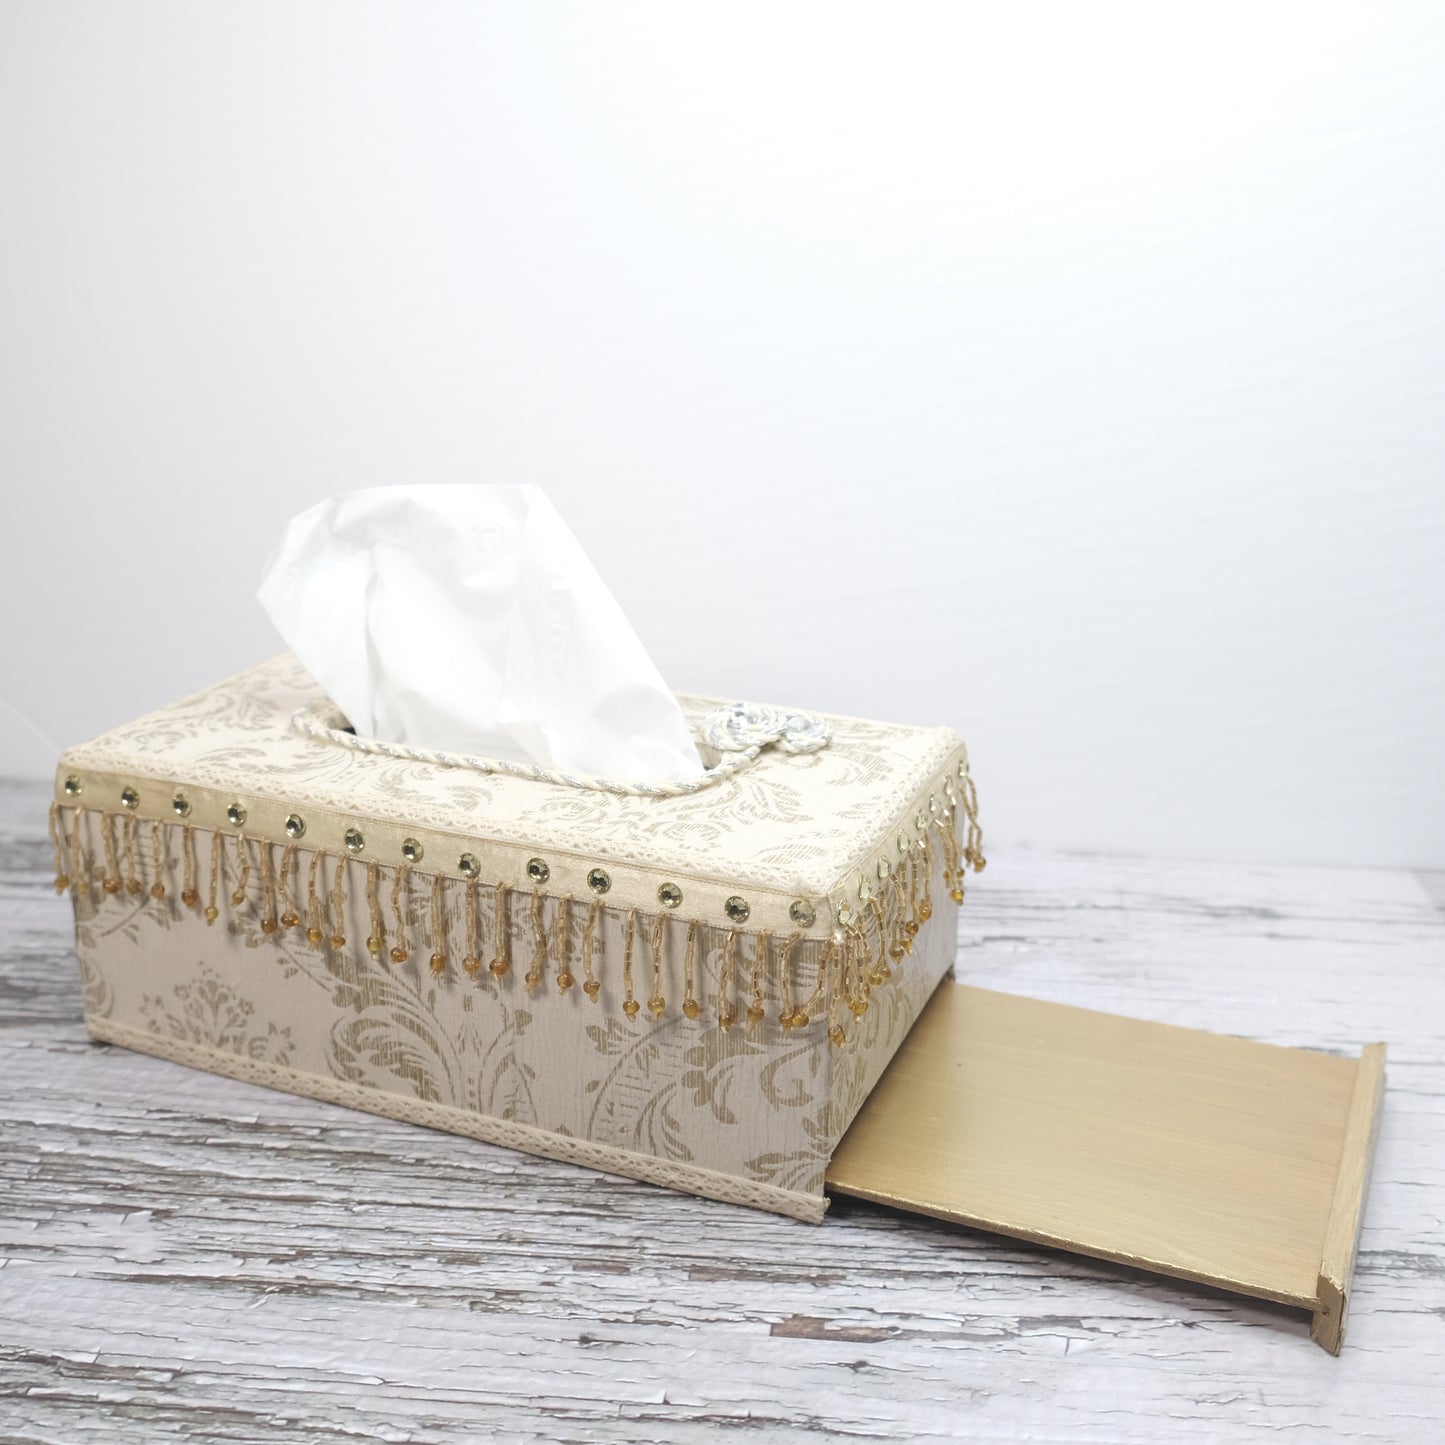 Handmade Queens Court Tissue Paper Box